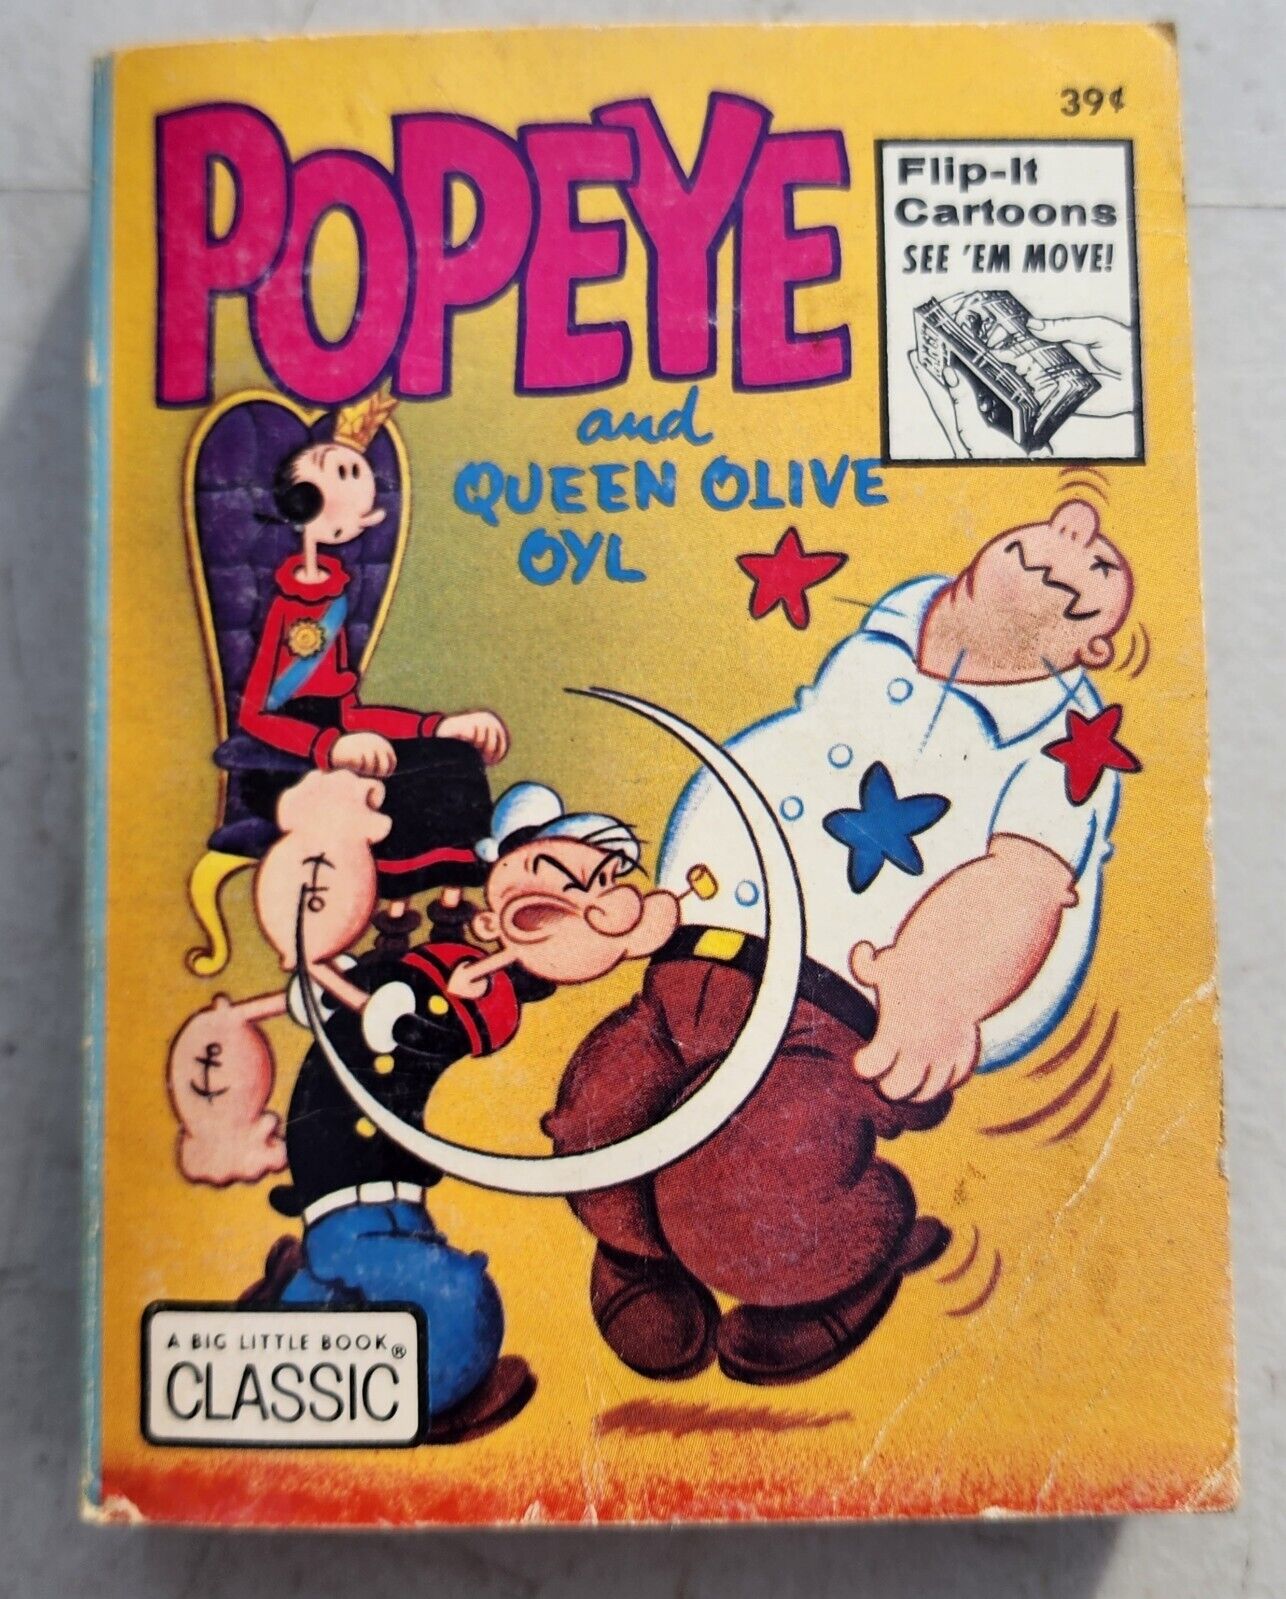 Vintage Big Little Book Popeye and Queen Olive Oyl Oil Classic Flip Thru Cartoon